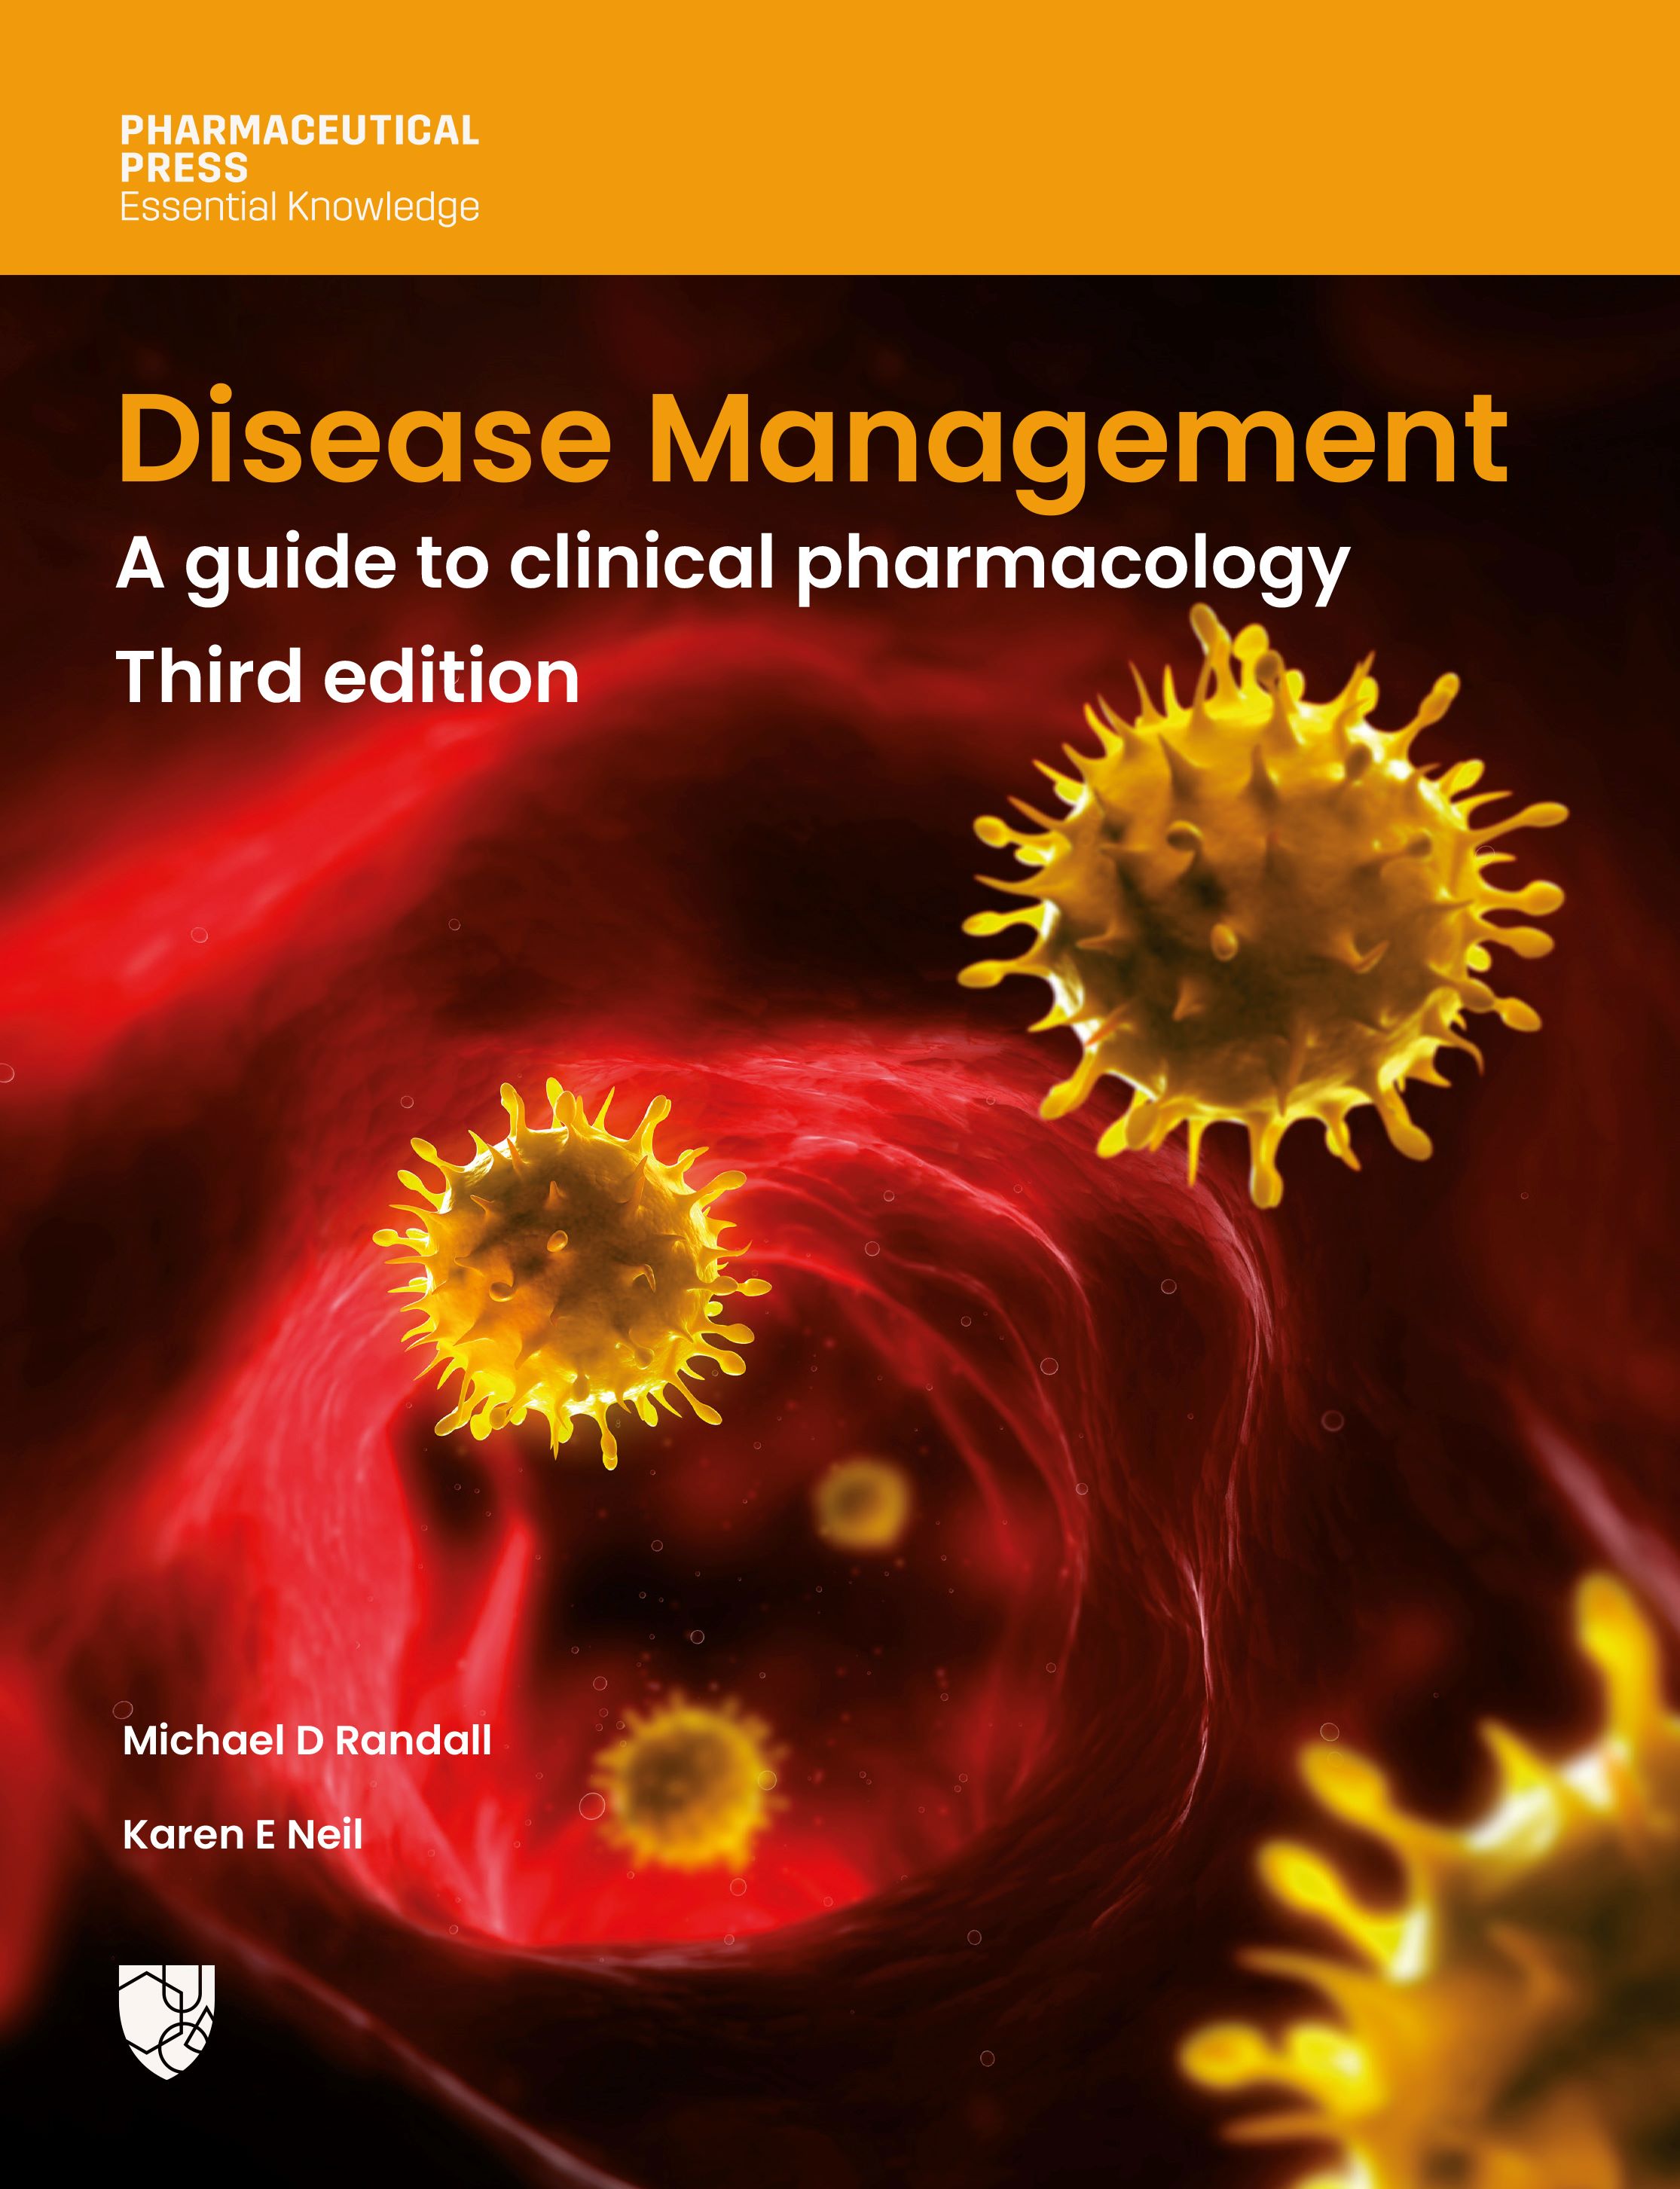 Pharmaceutical　Disease　Edition　Third　Management　Press